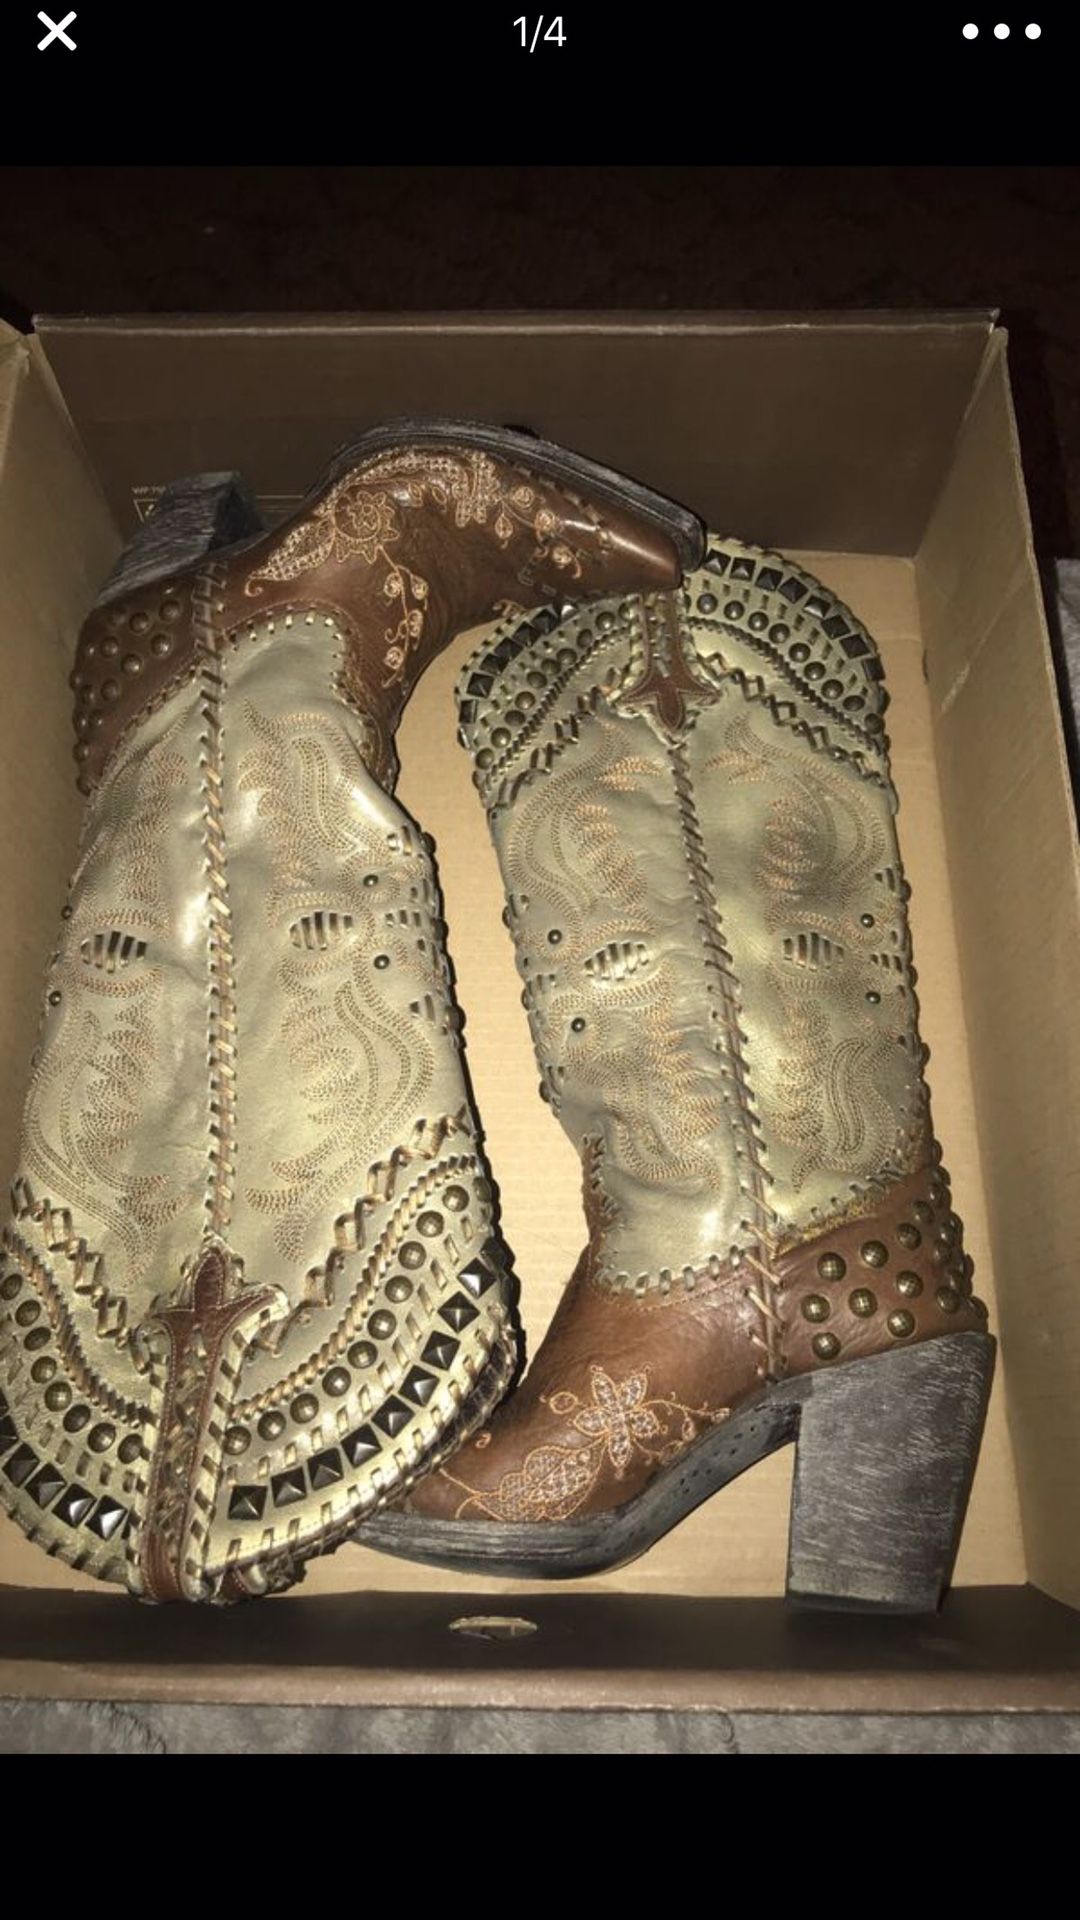 Ranchero boots